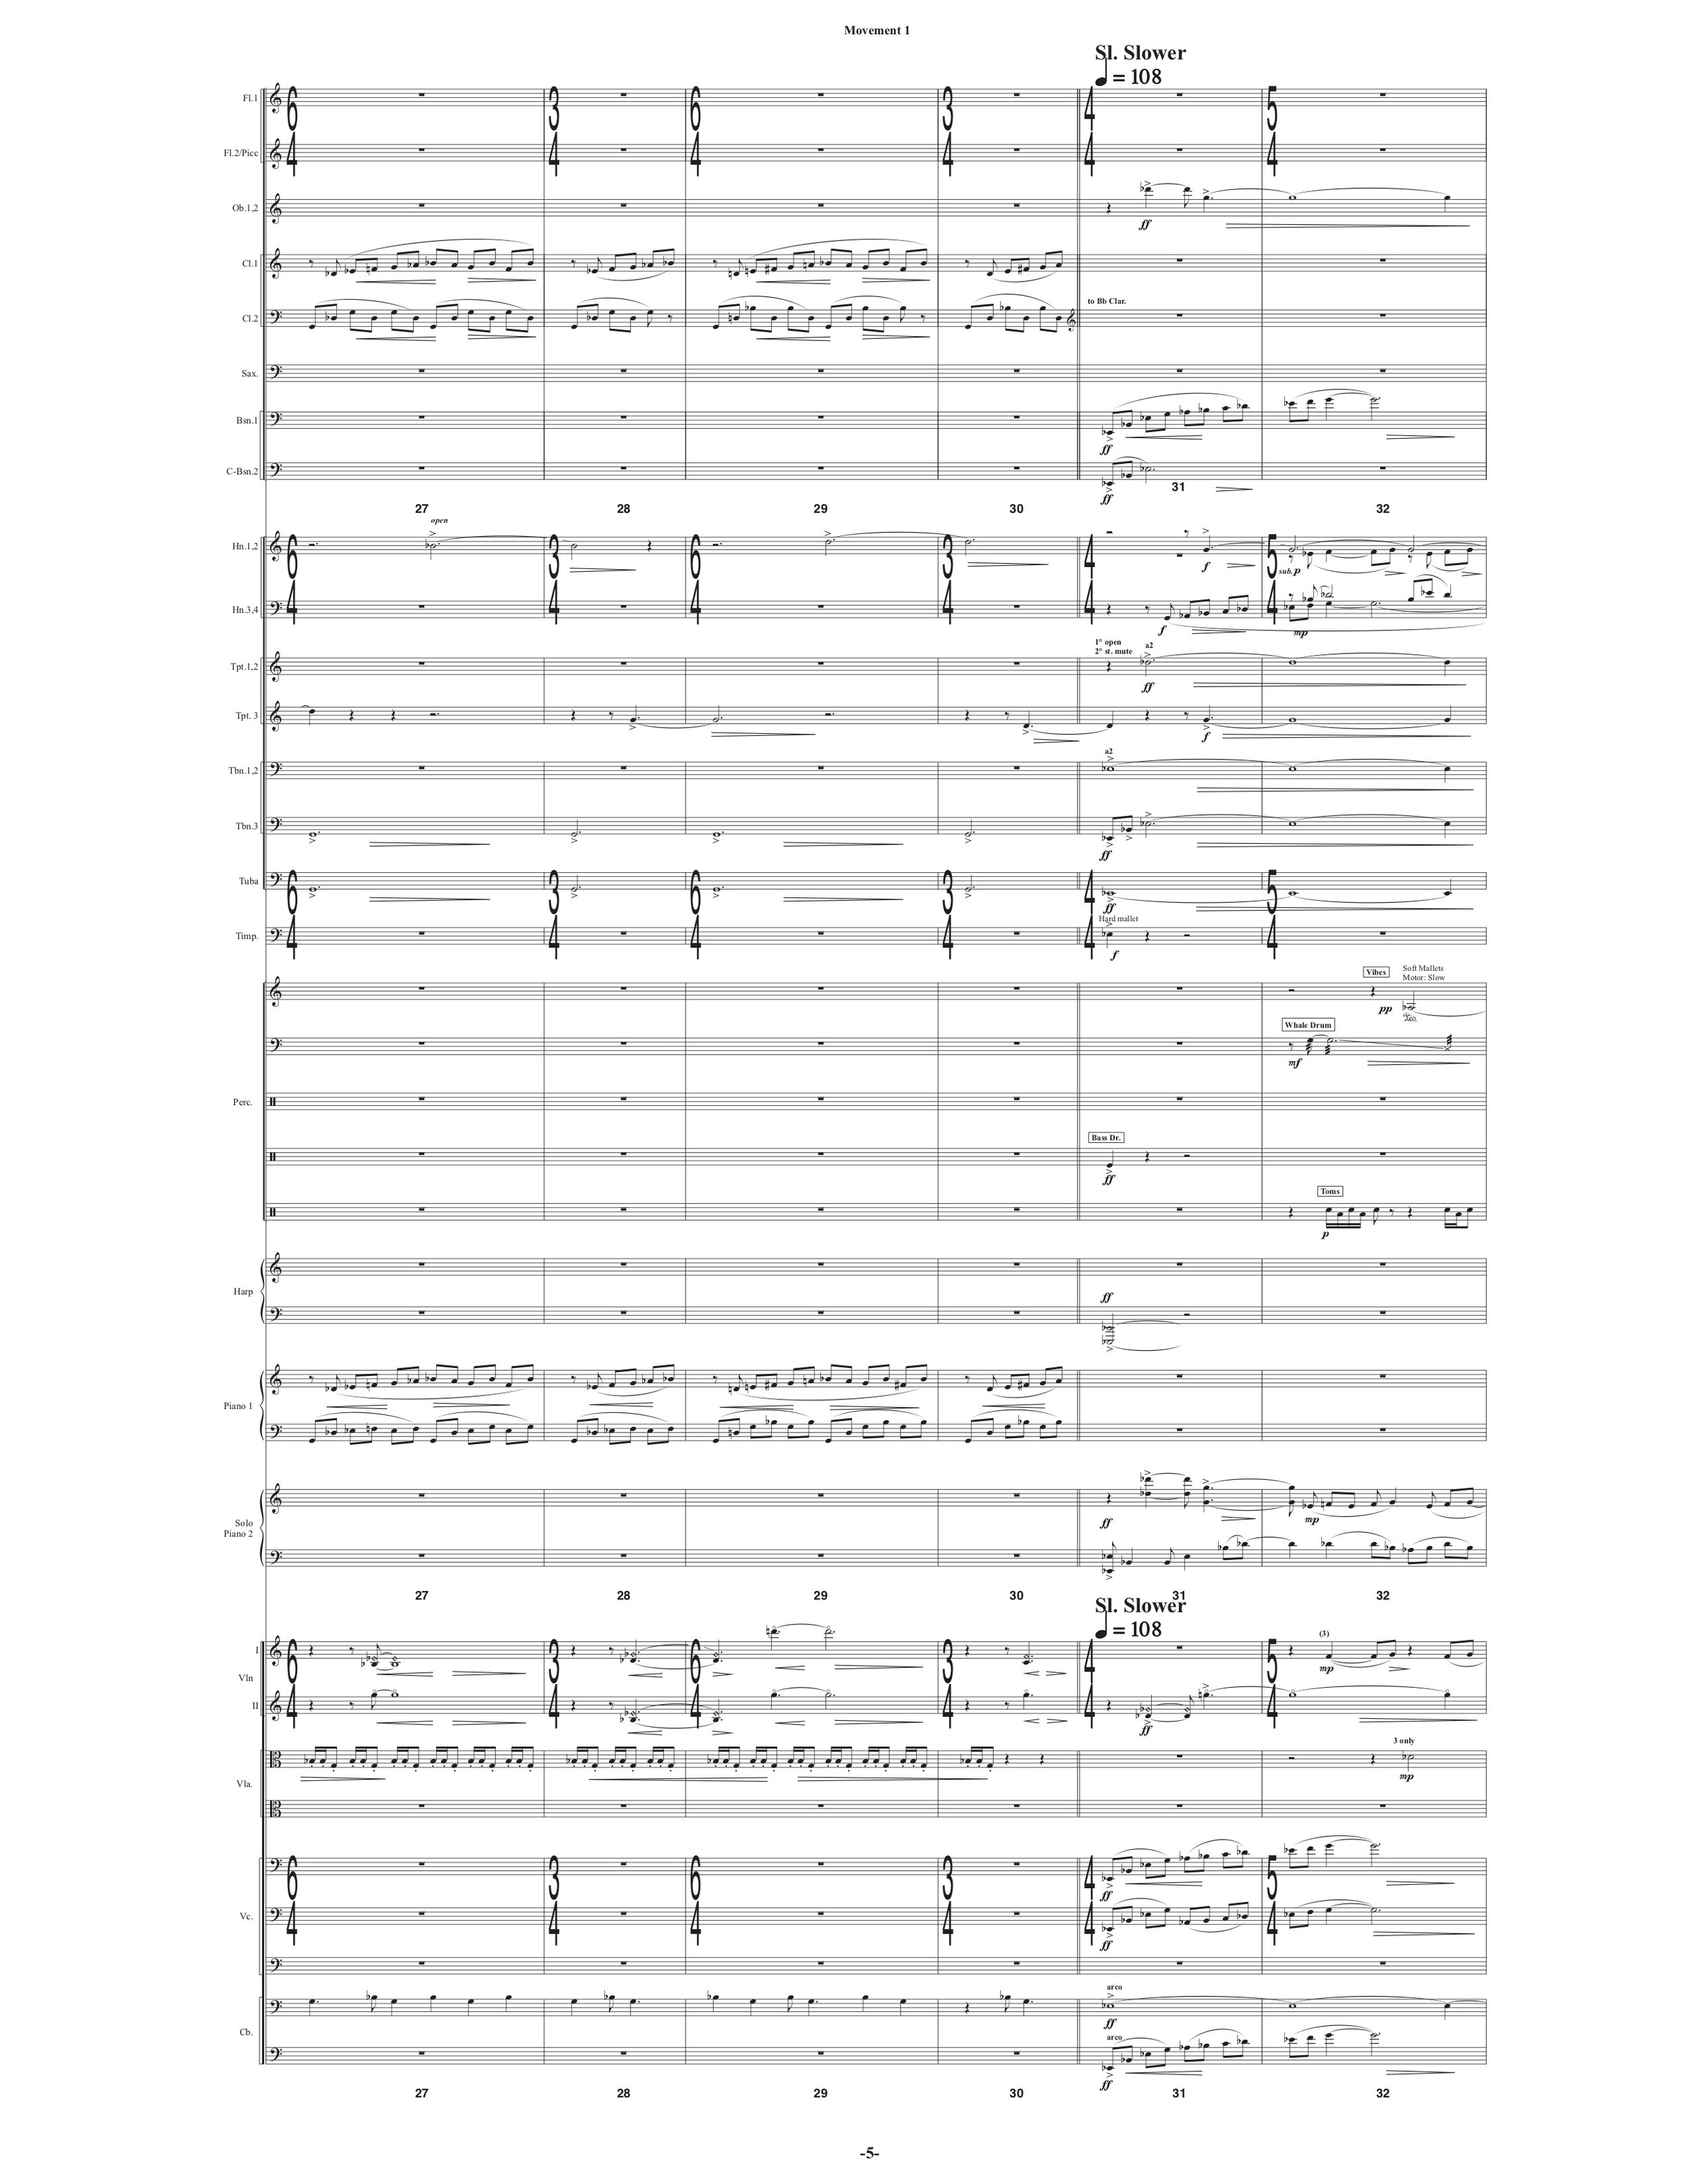 Symphony_Orch & 2 Pianos p10.jpg